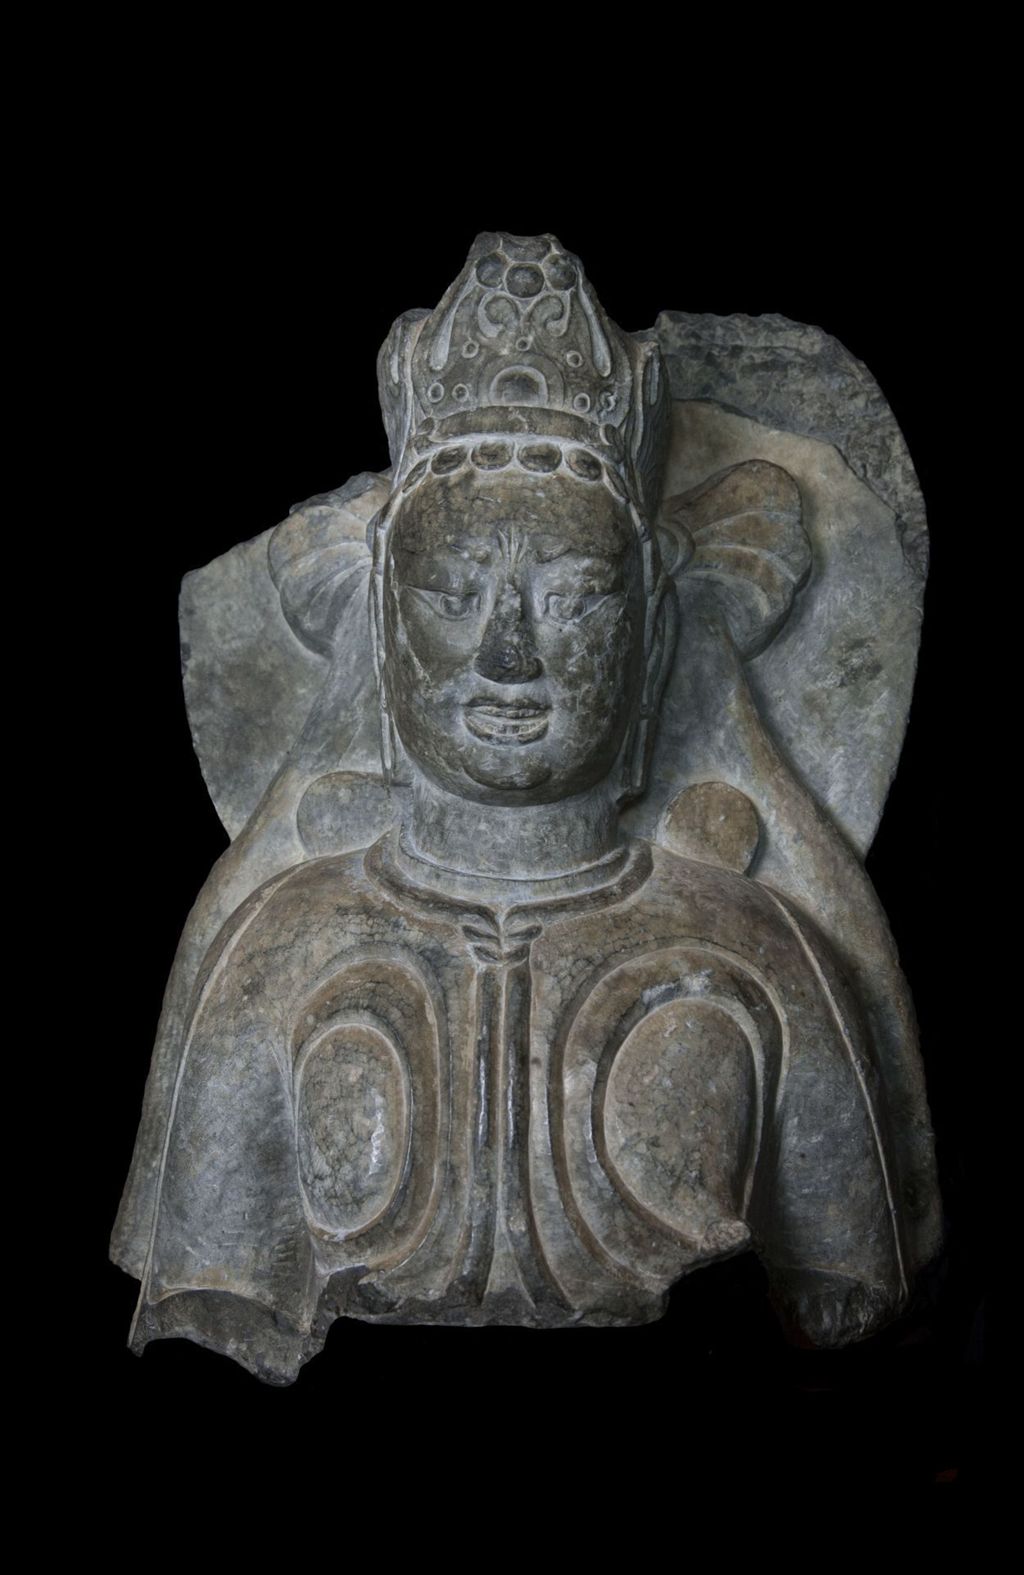 Miniature of Guardian King